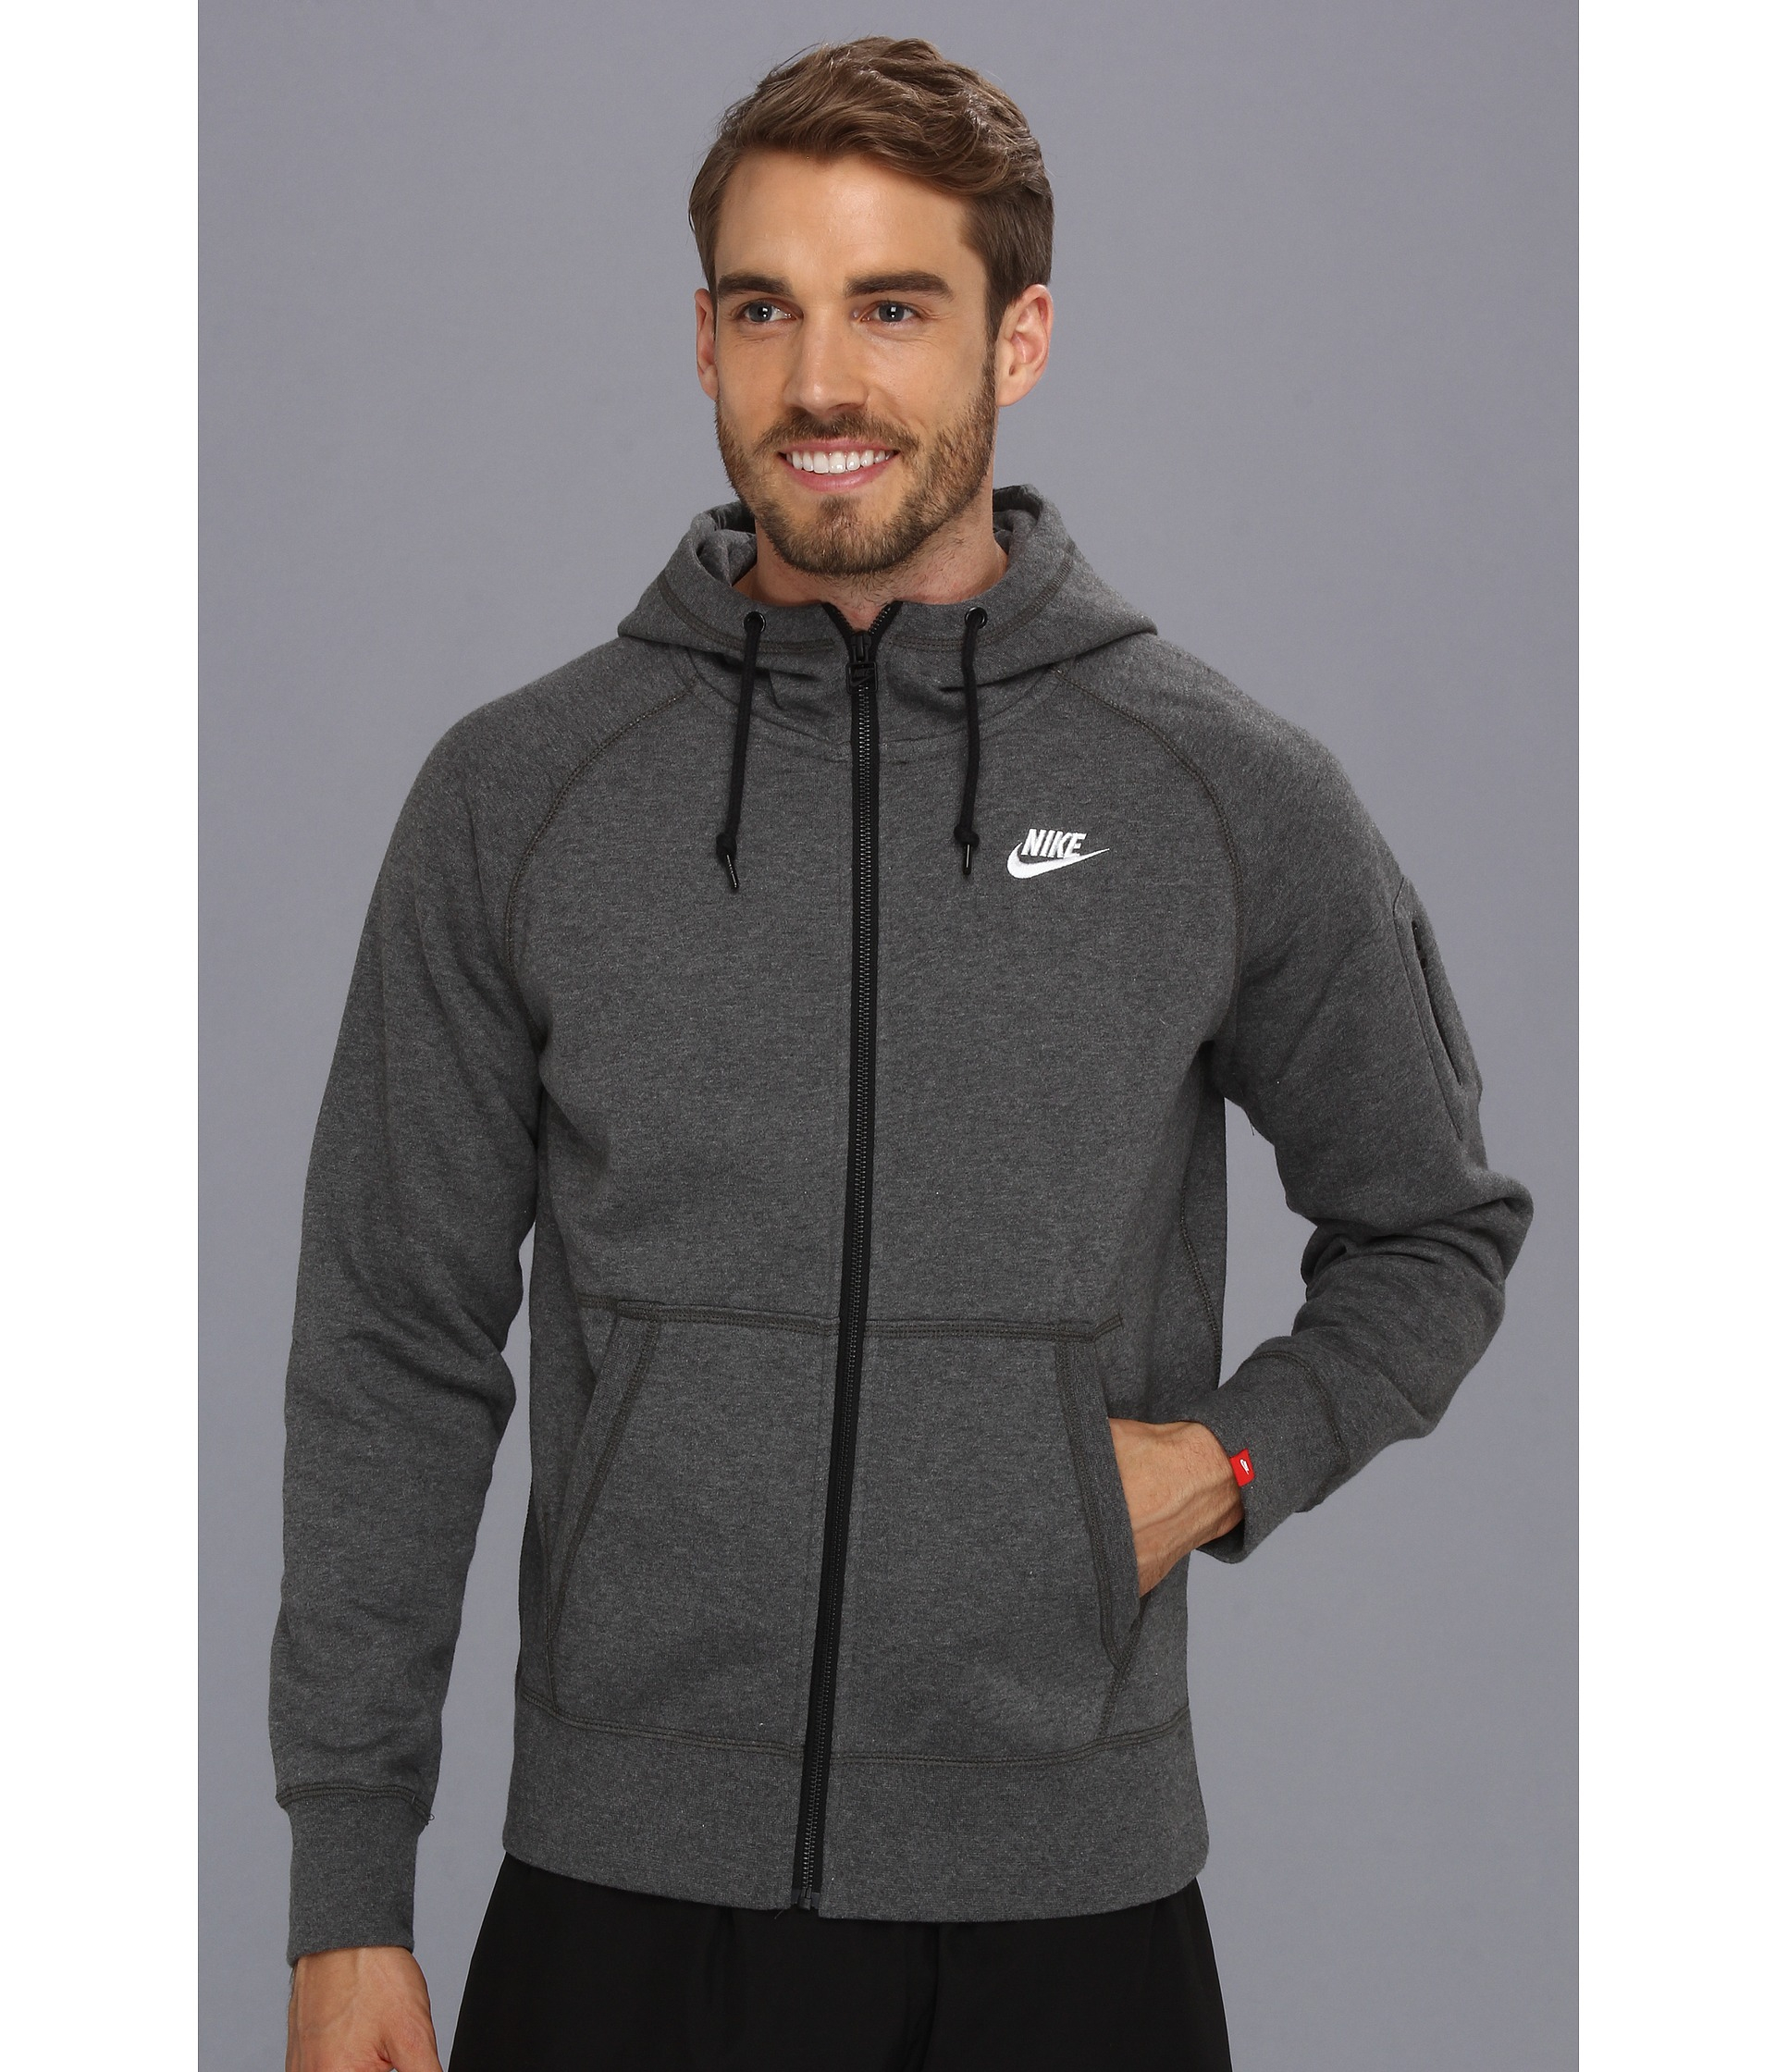 Nike Charcoal Grey Hoodies / Nike Hoodies Sweatshirts Sweaters Sports ...